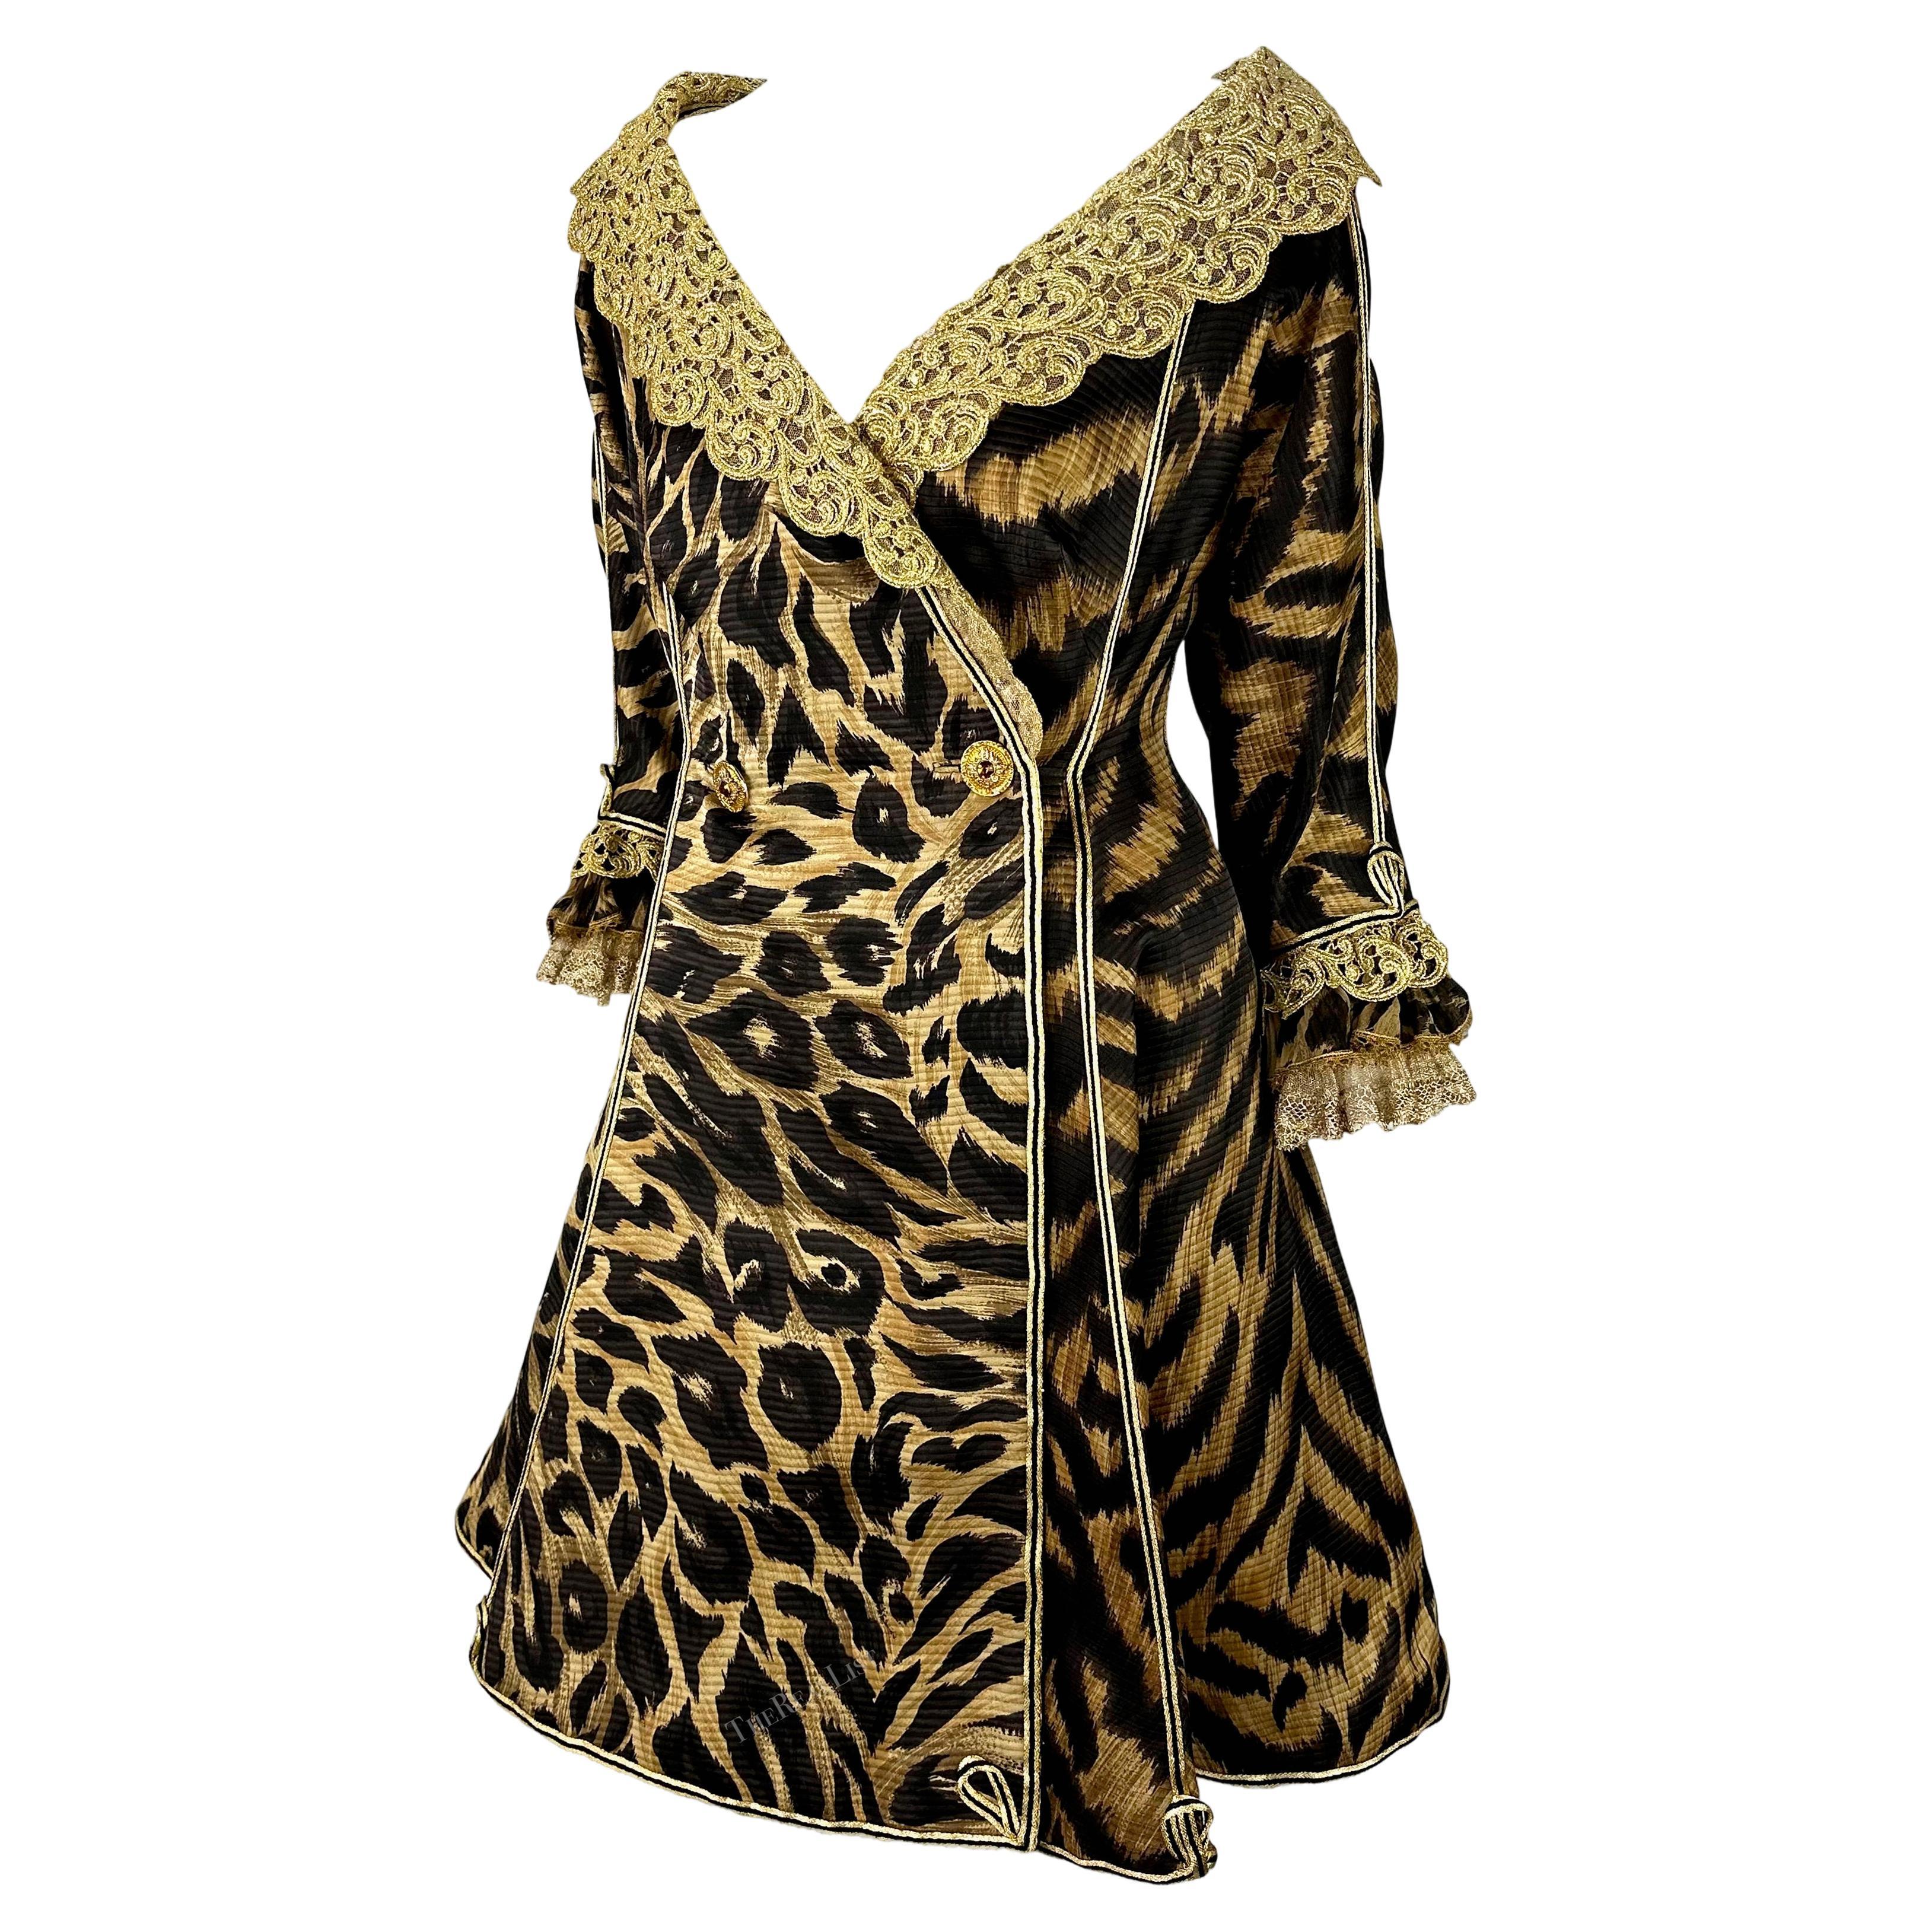 S/S 1992 Atelier Versace Haute Couture Runway Leopard Silk Gold Lace Coat Dress For Sale 1